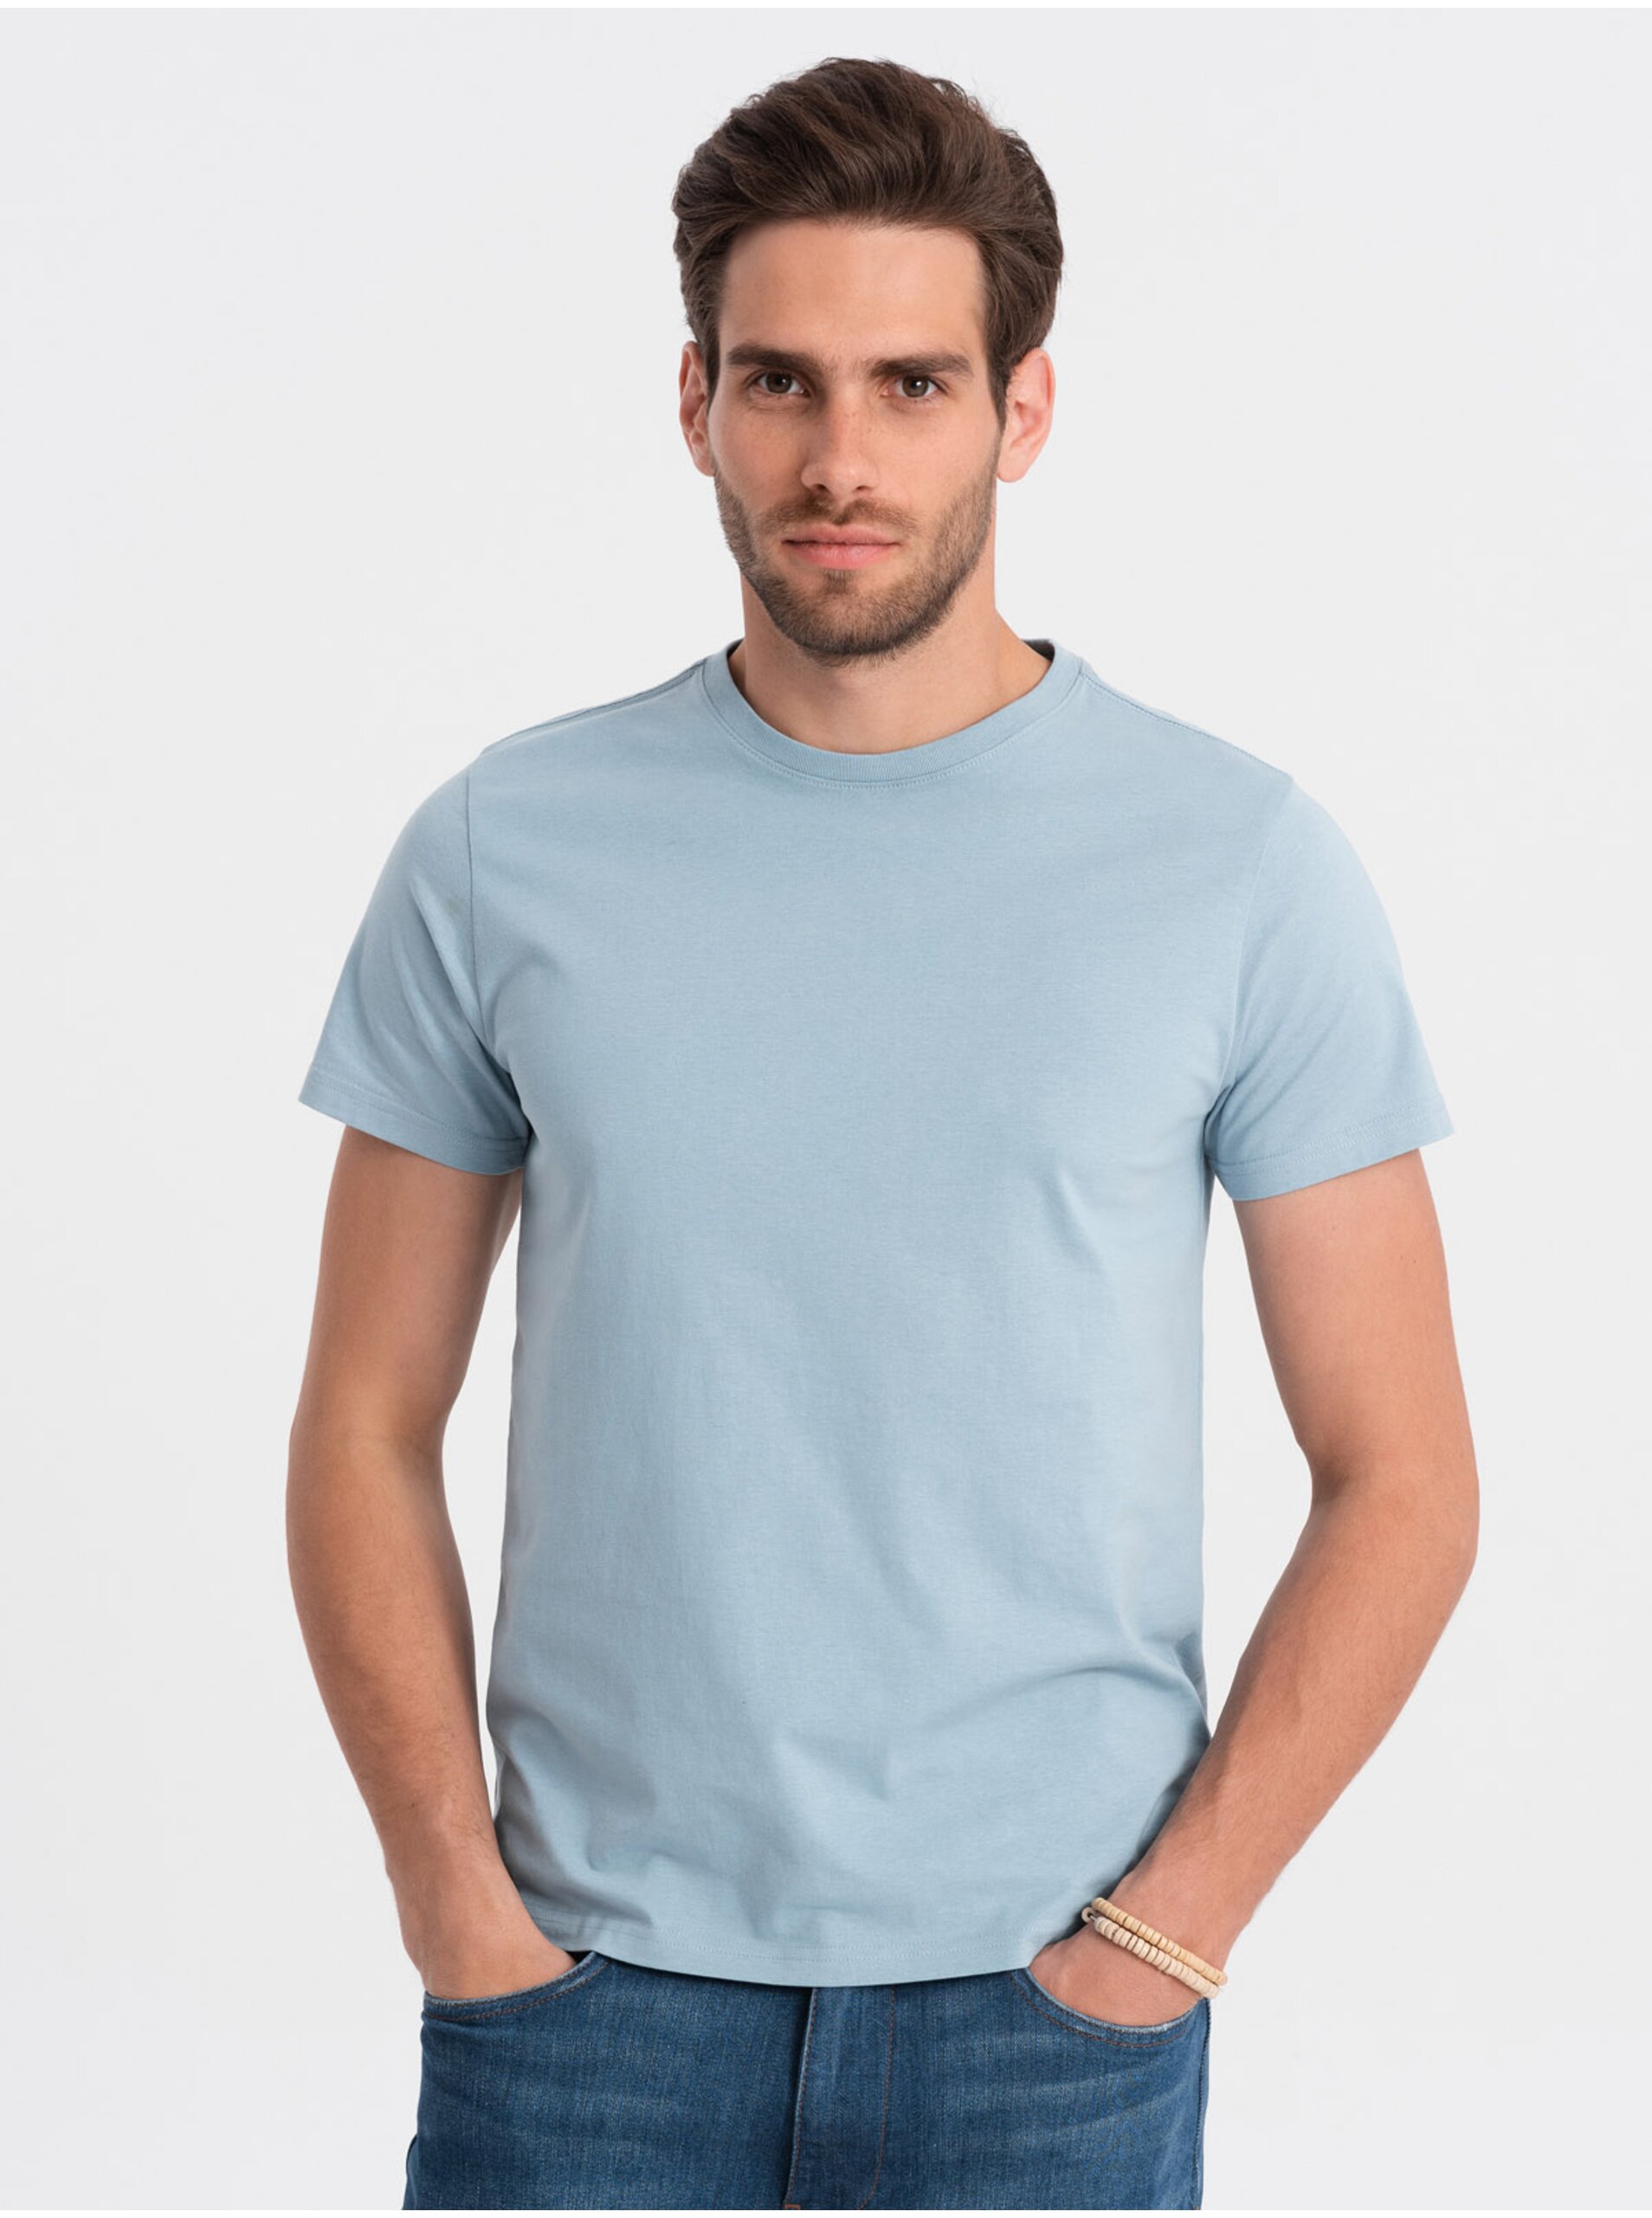 Lacno Svetlomodré pánske basic tričko Ombre Clothing